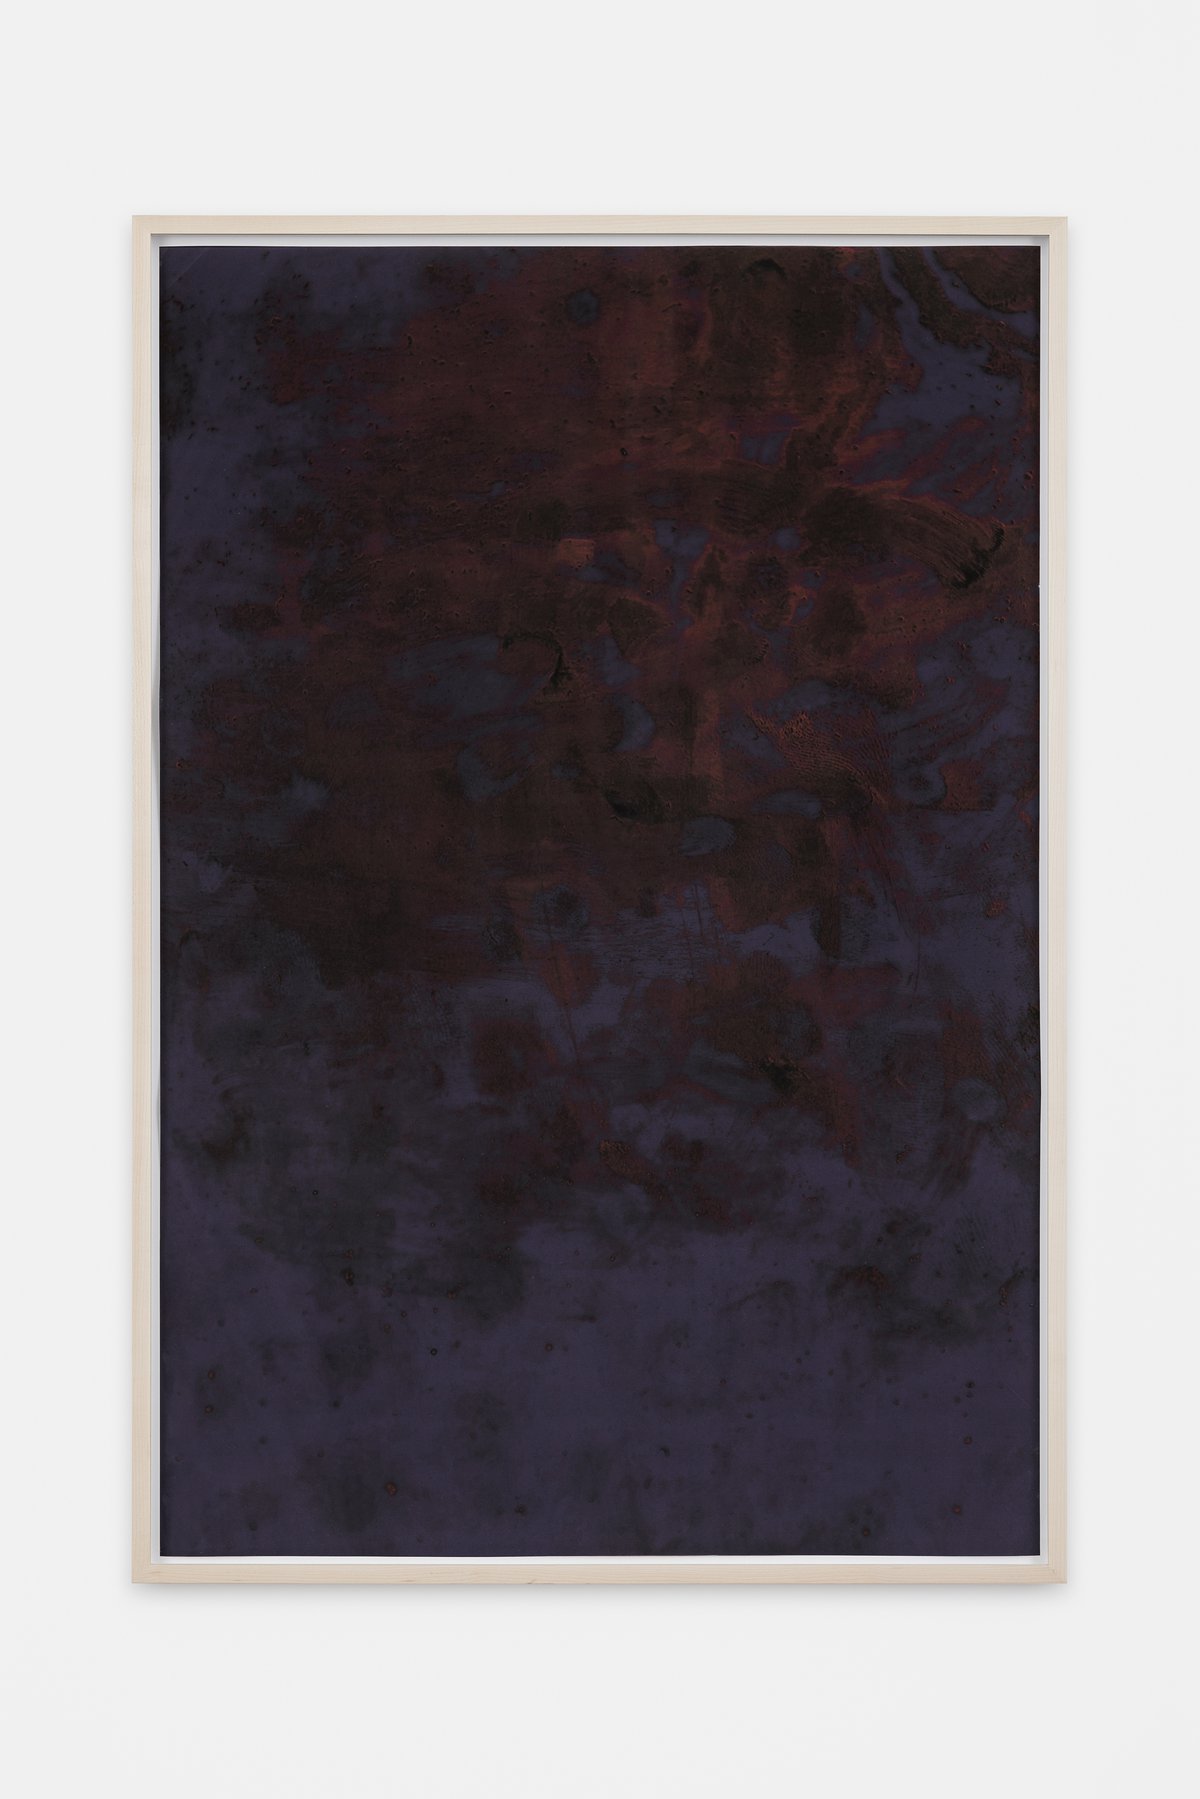 Lisa HolzerFamily (1), 2022Pigment print on cotton paper, matt varnish on wood110 x 77 cm